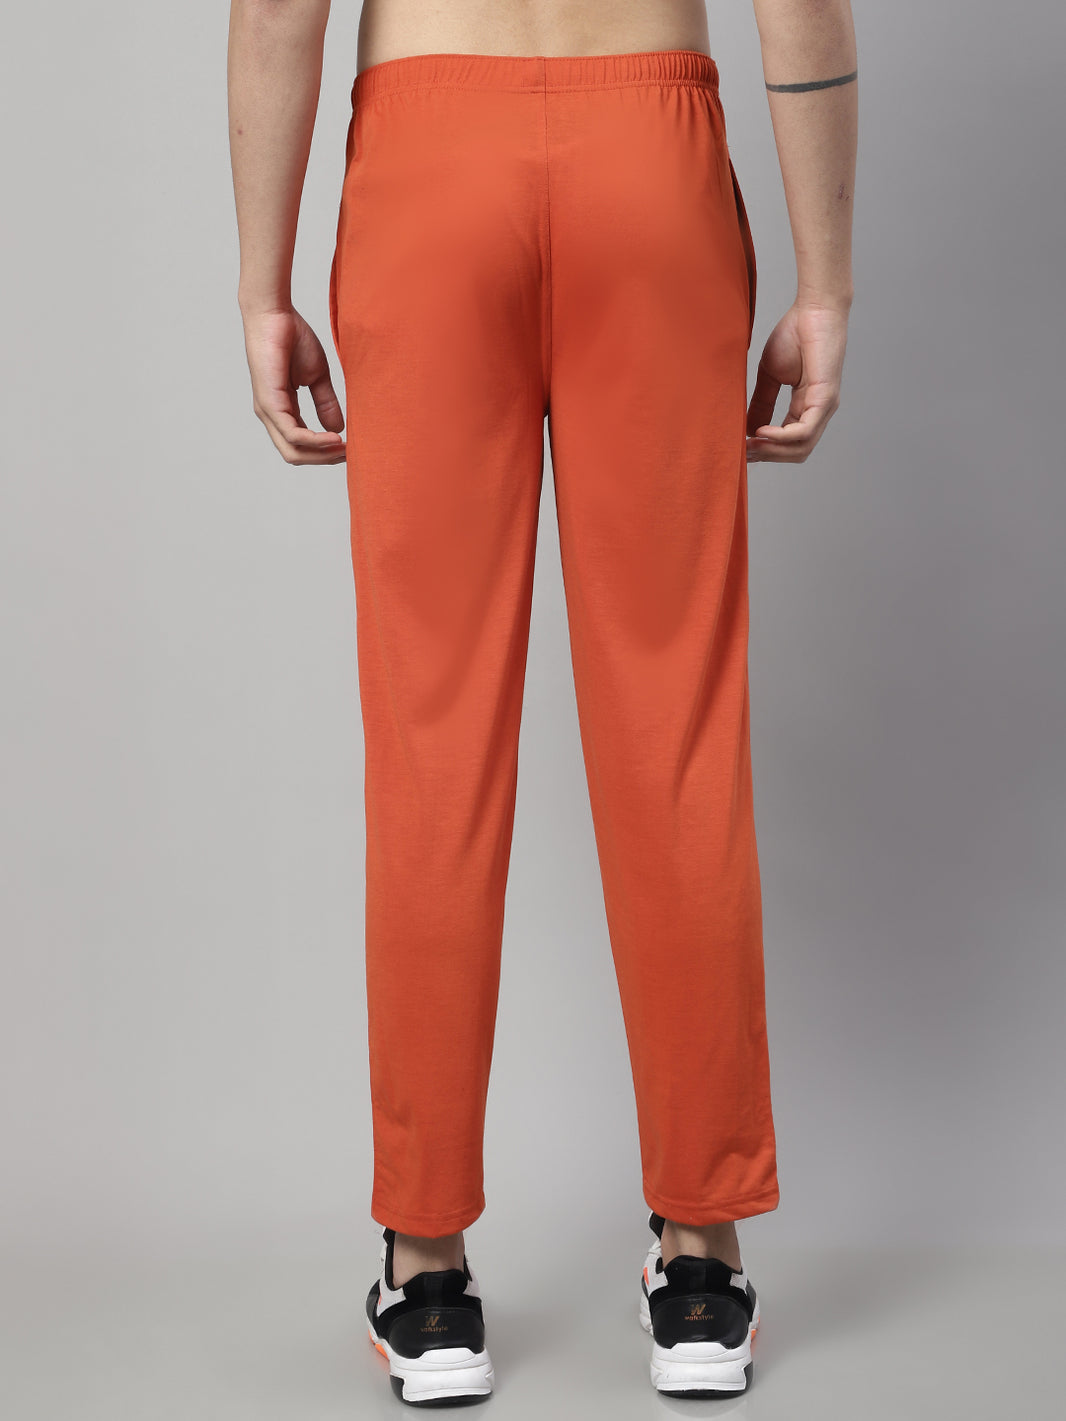 KARTAVYA Cotton Cargo Track Pant for Men, Men's Regular Fit Track Pants  Lower with Multi-Pockets & Side Pockets, Regular Fit for Men Track, Pajama  for